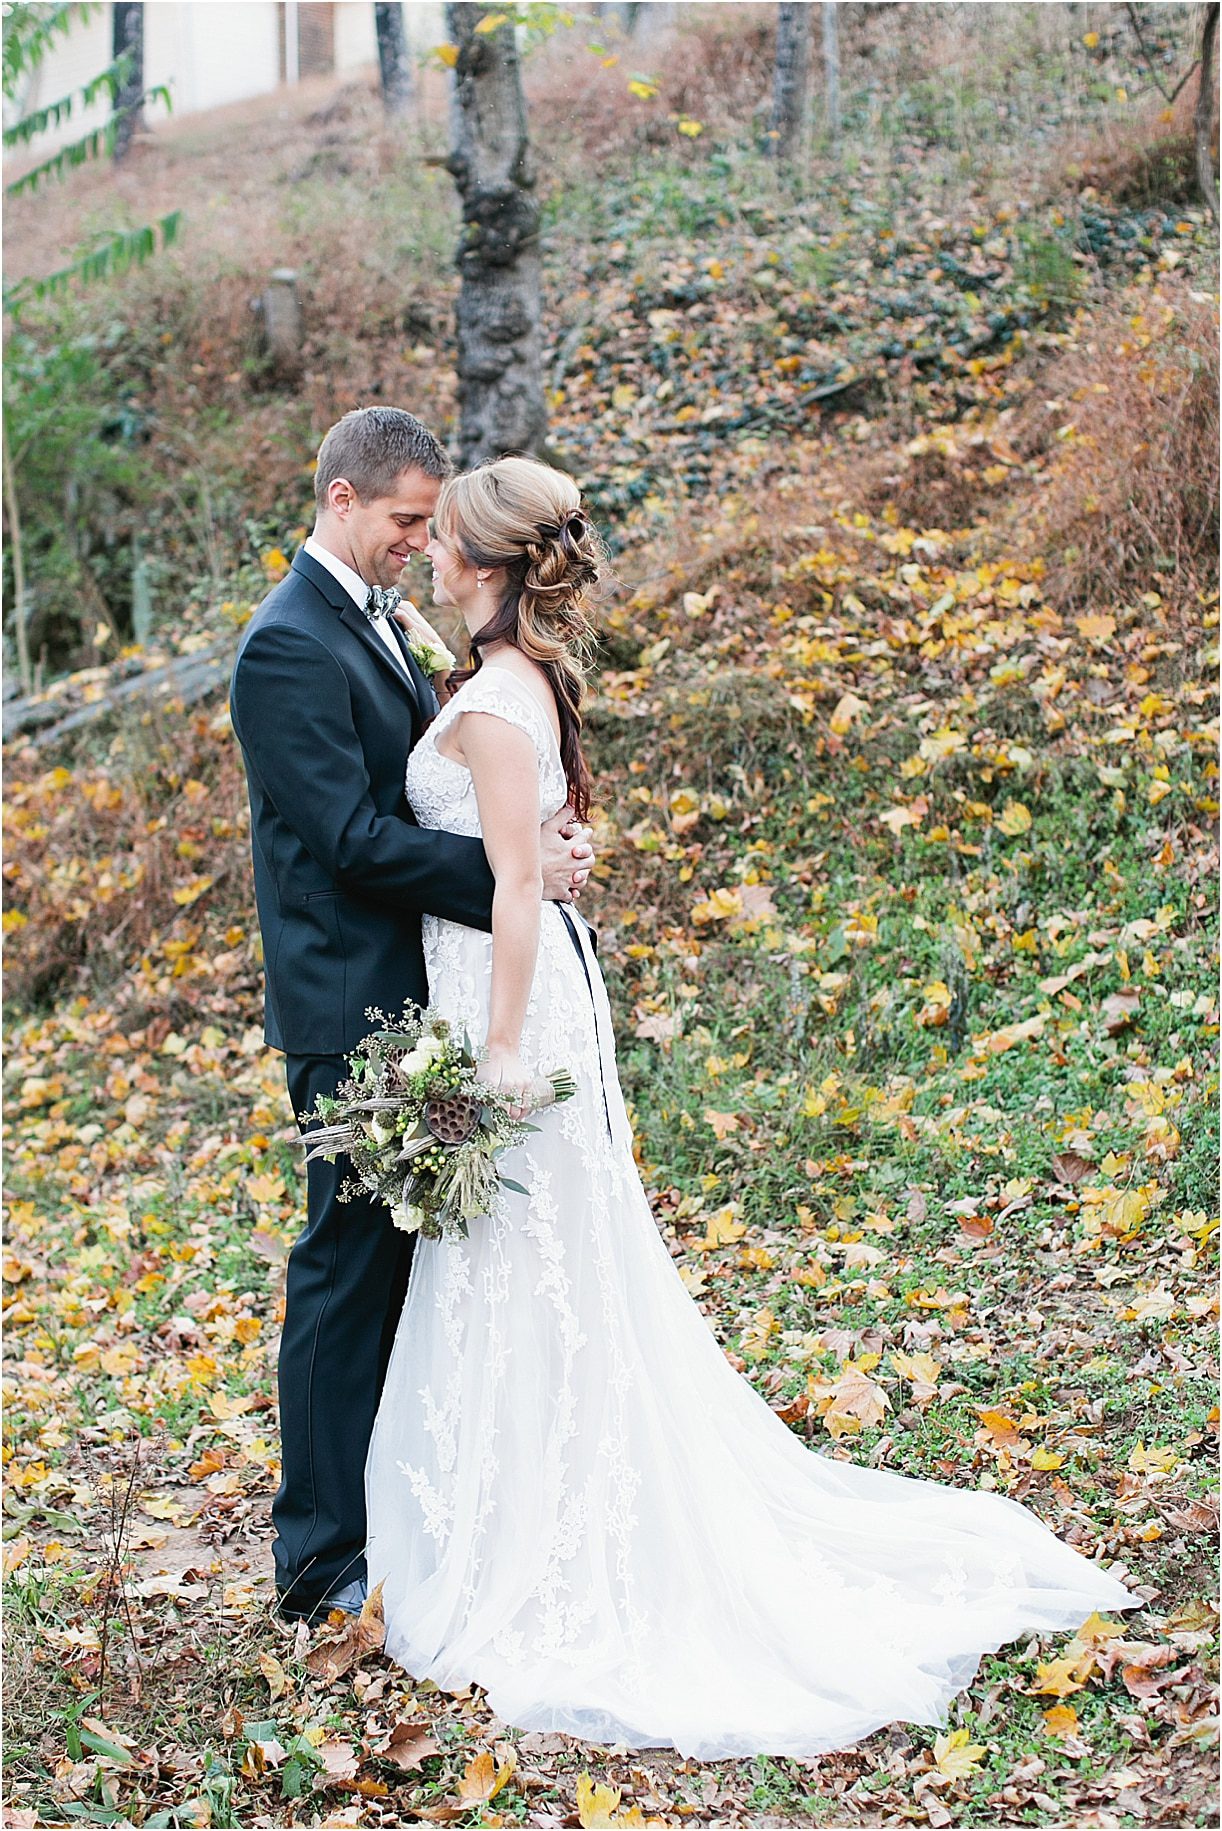 Fall Wedding Decorations | Fall Wedding Centerpieces | Rustic Wedding Ideas for Fall | Autumn Hill City Bride Virginia Weddings